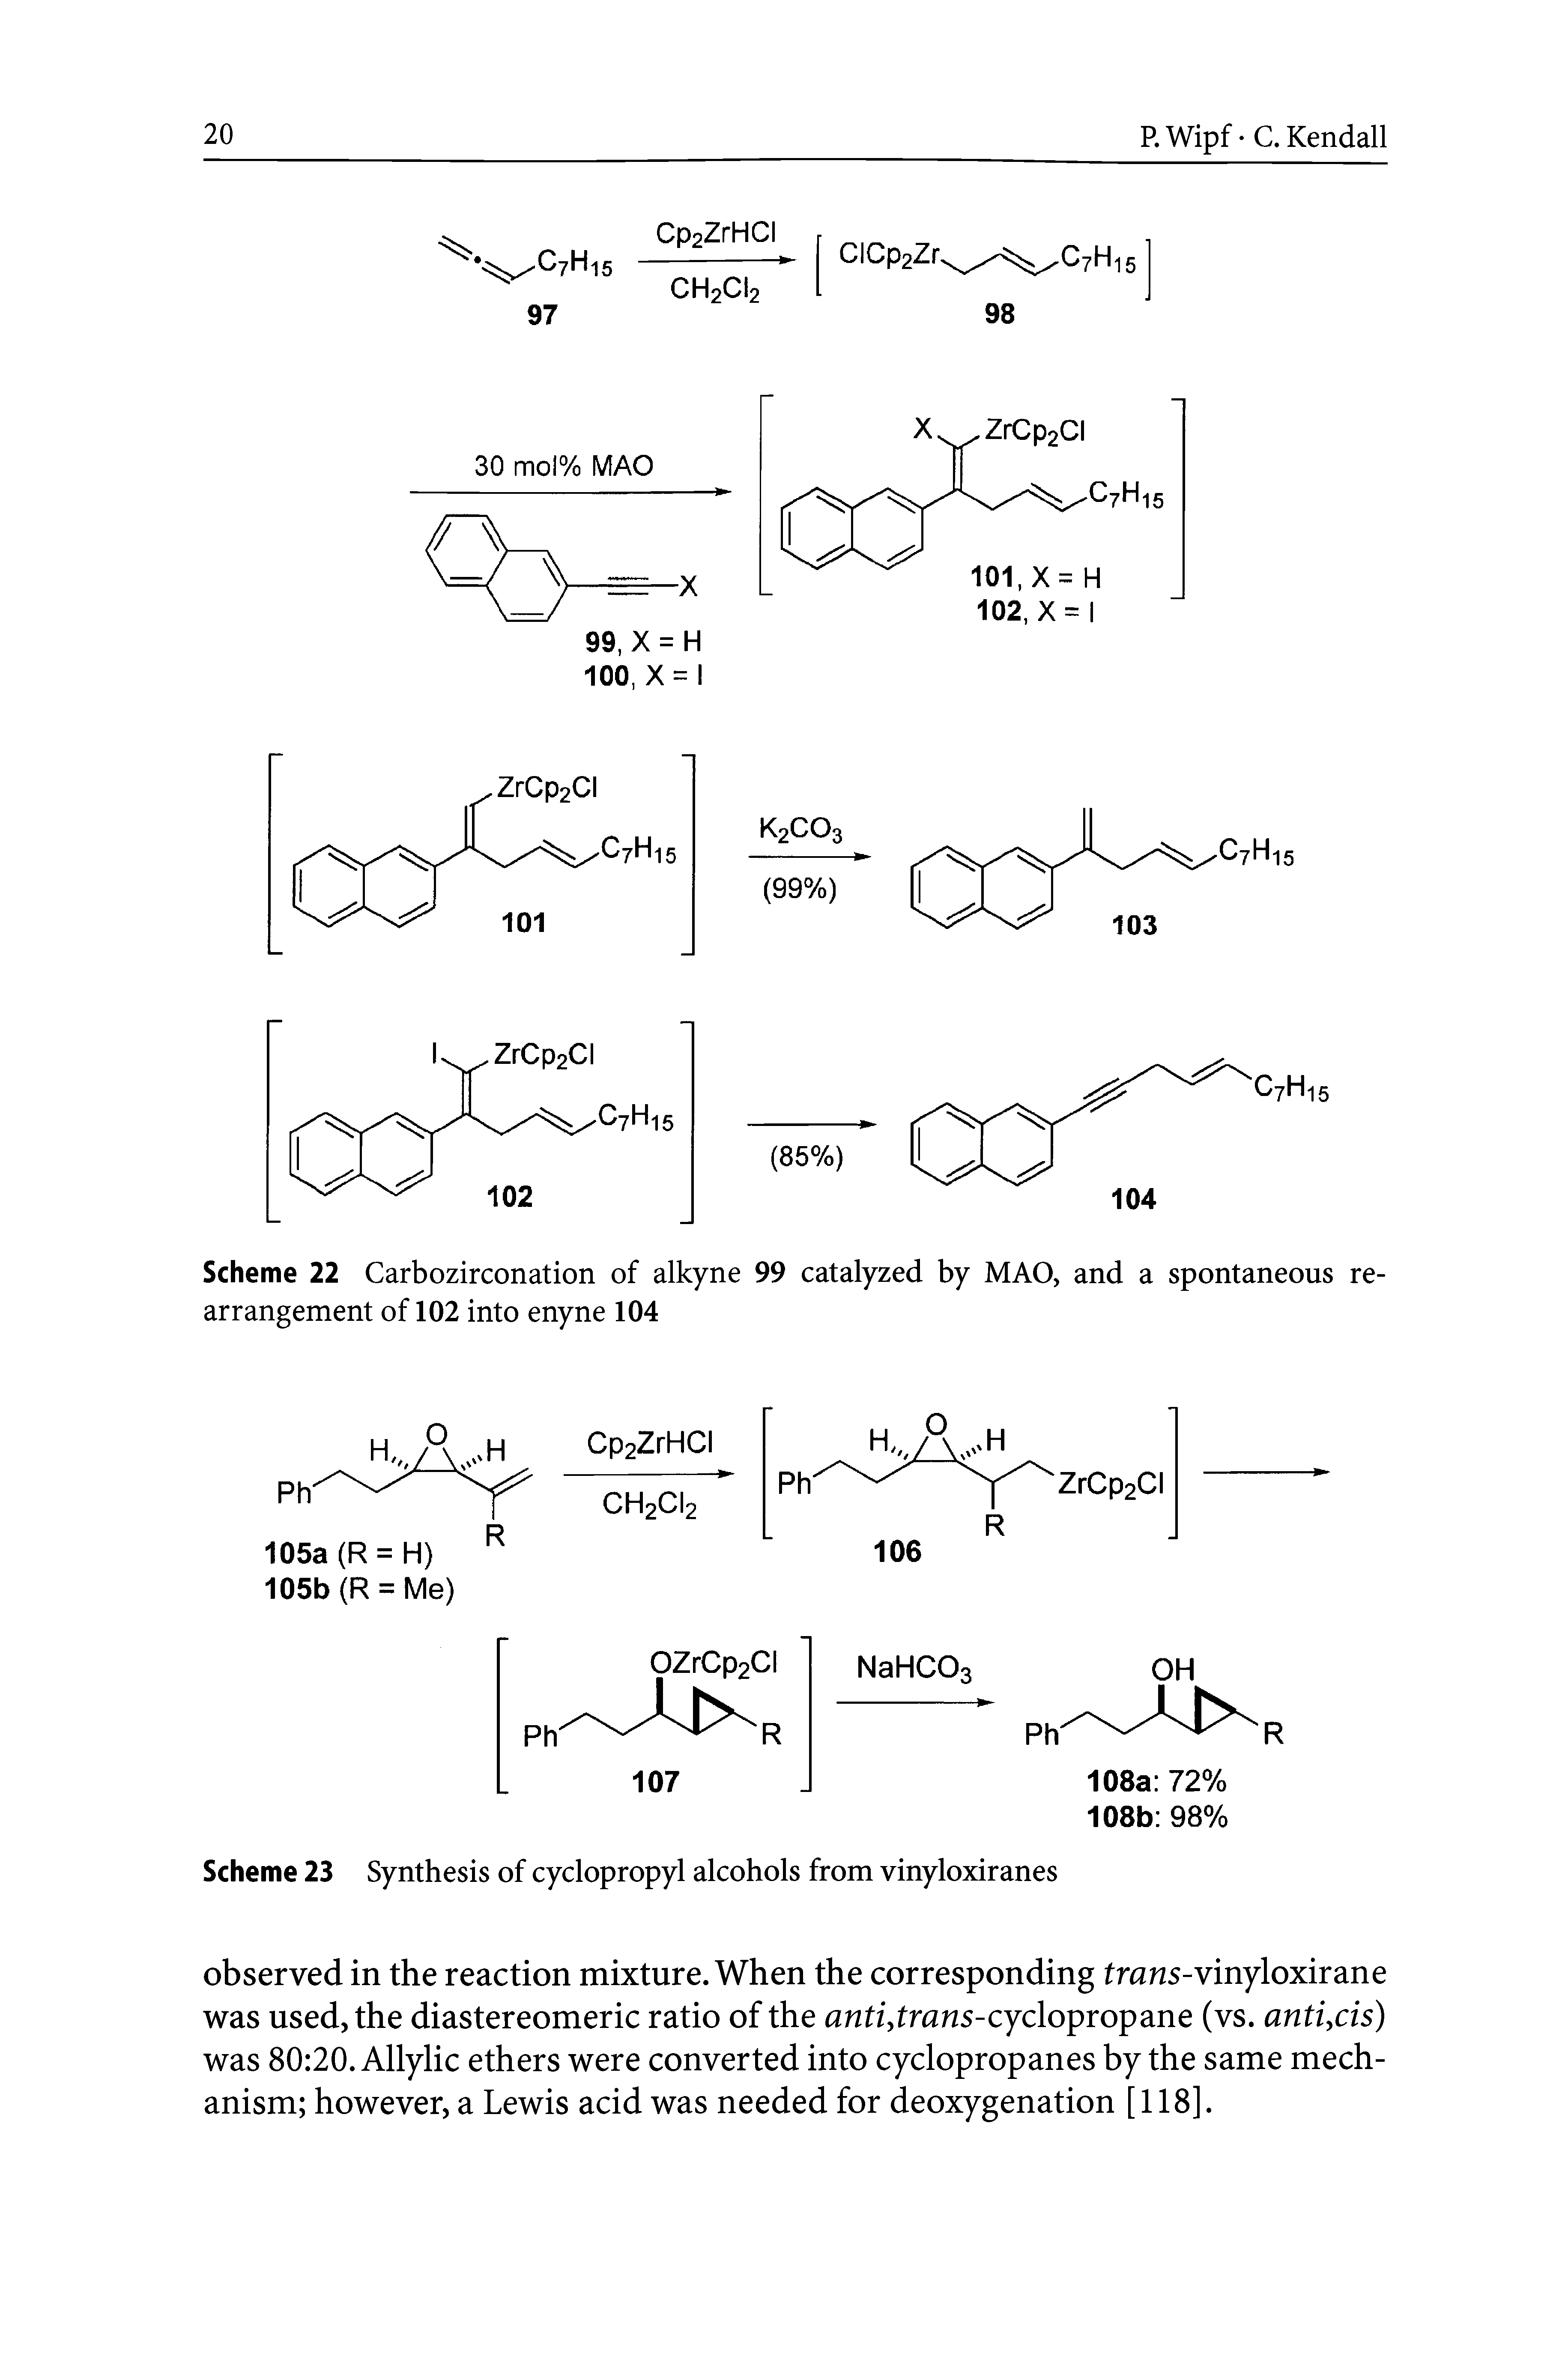 Scheme 23 Synthesis of cyclopropyl alcohols from vinyloxiranes...